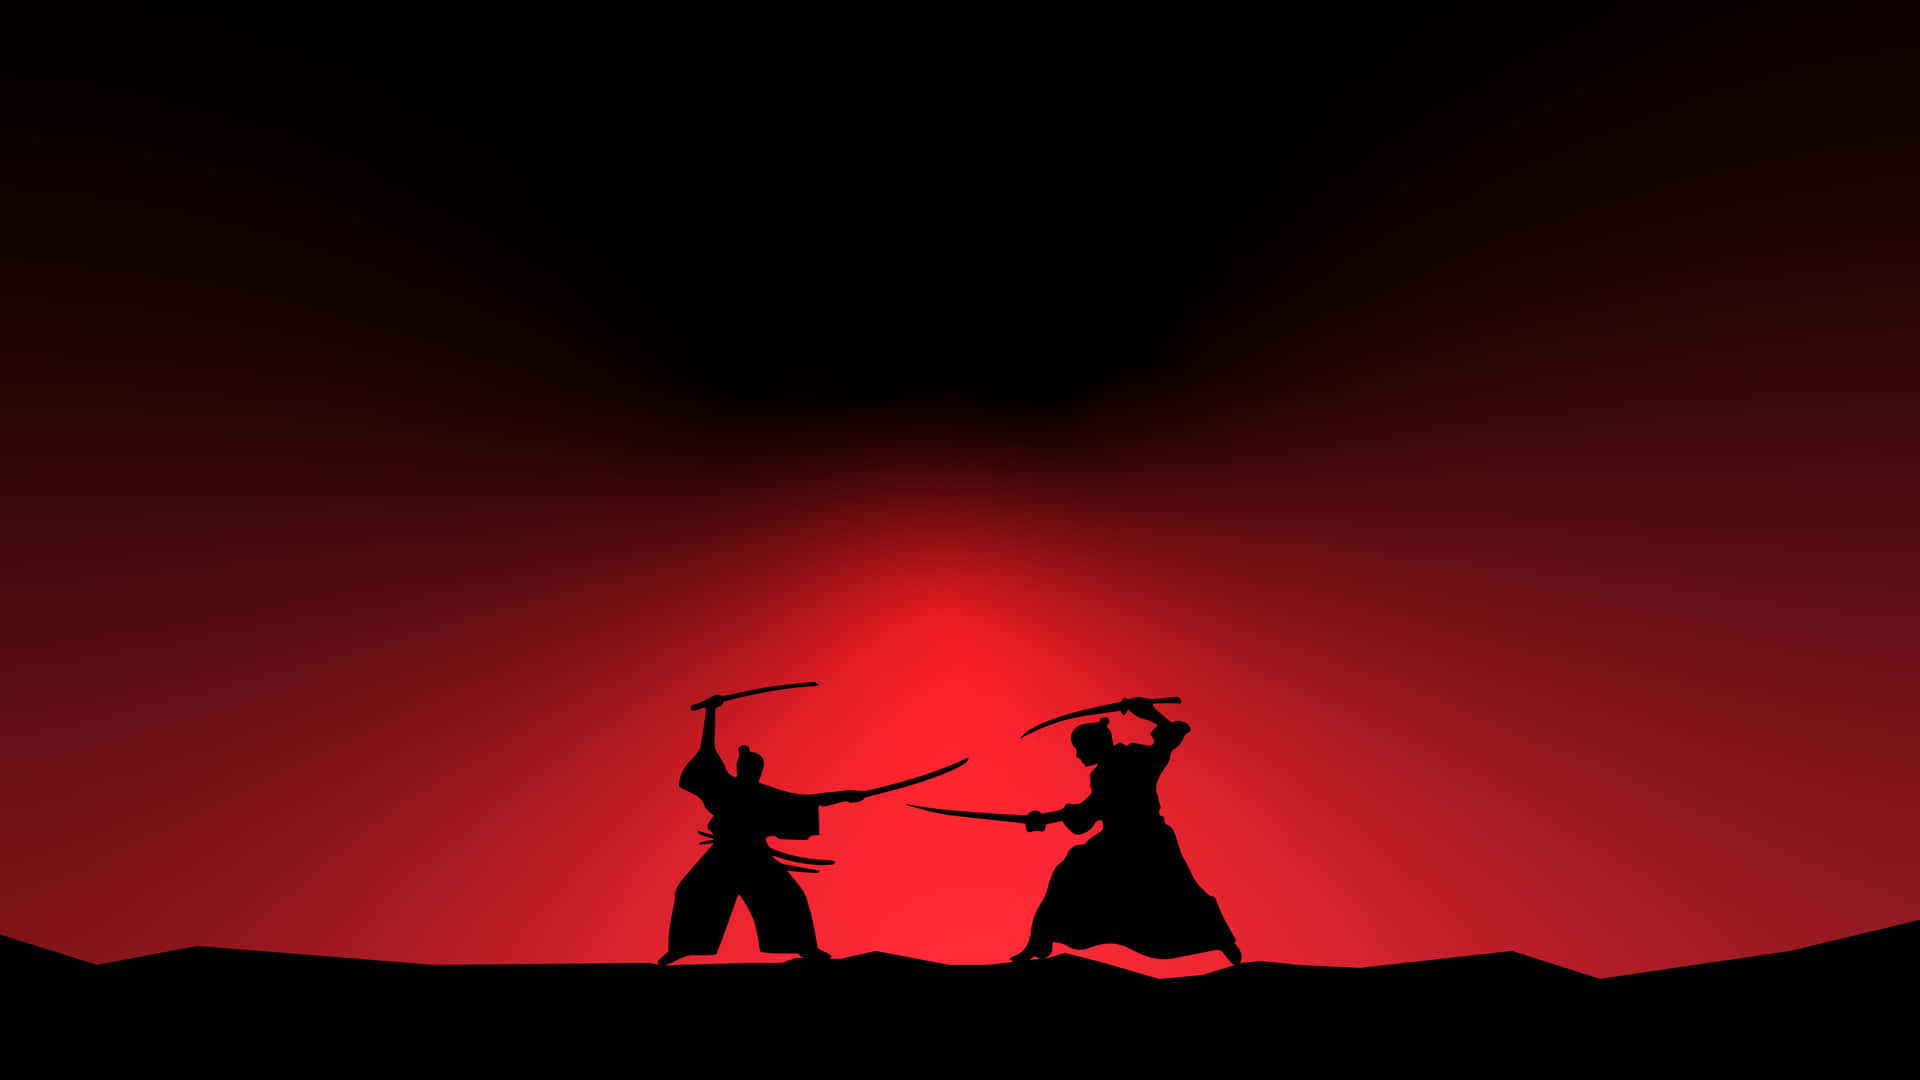 Fierce Samurai Warrior in a Cinematic Battle Scene Wallpaper